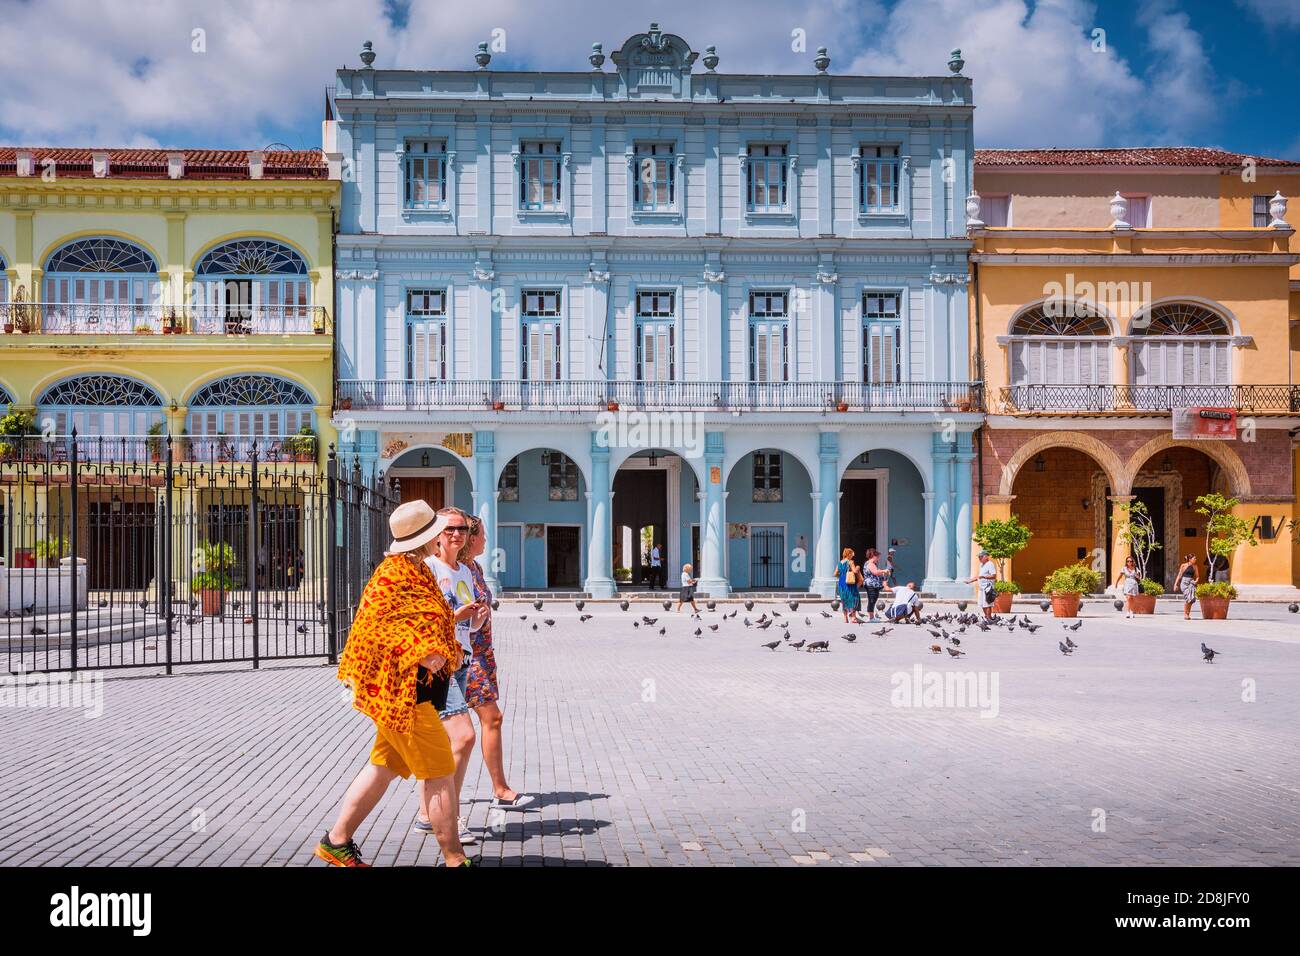 Bunte Gebäude in Plaza Vieja - Old Square. Kuba, Lateinamerika und die Karibik Stockfoto